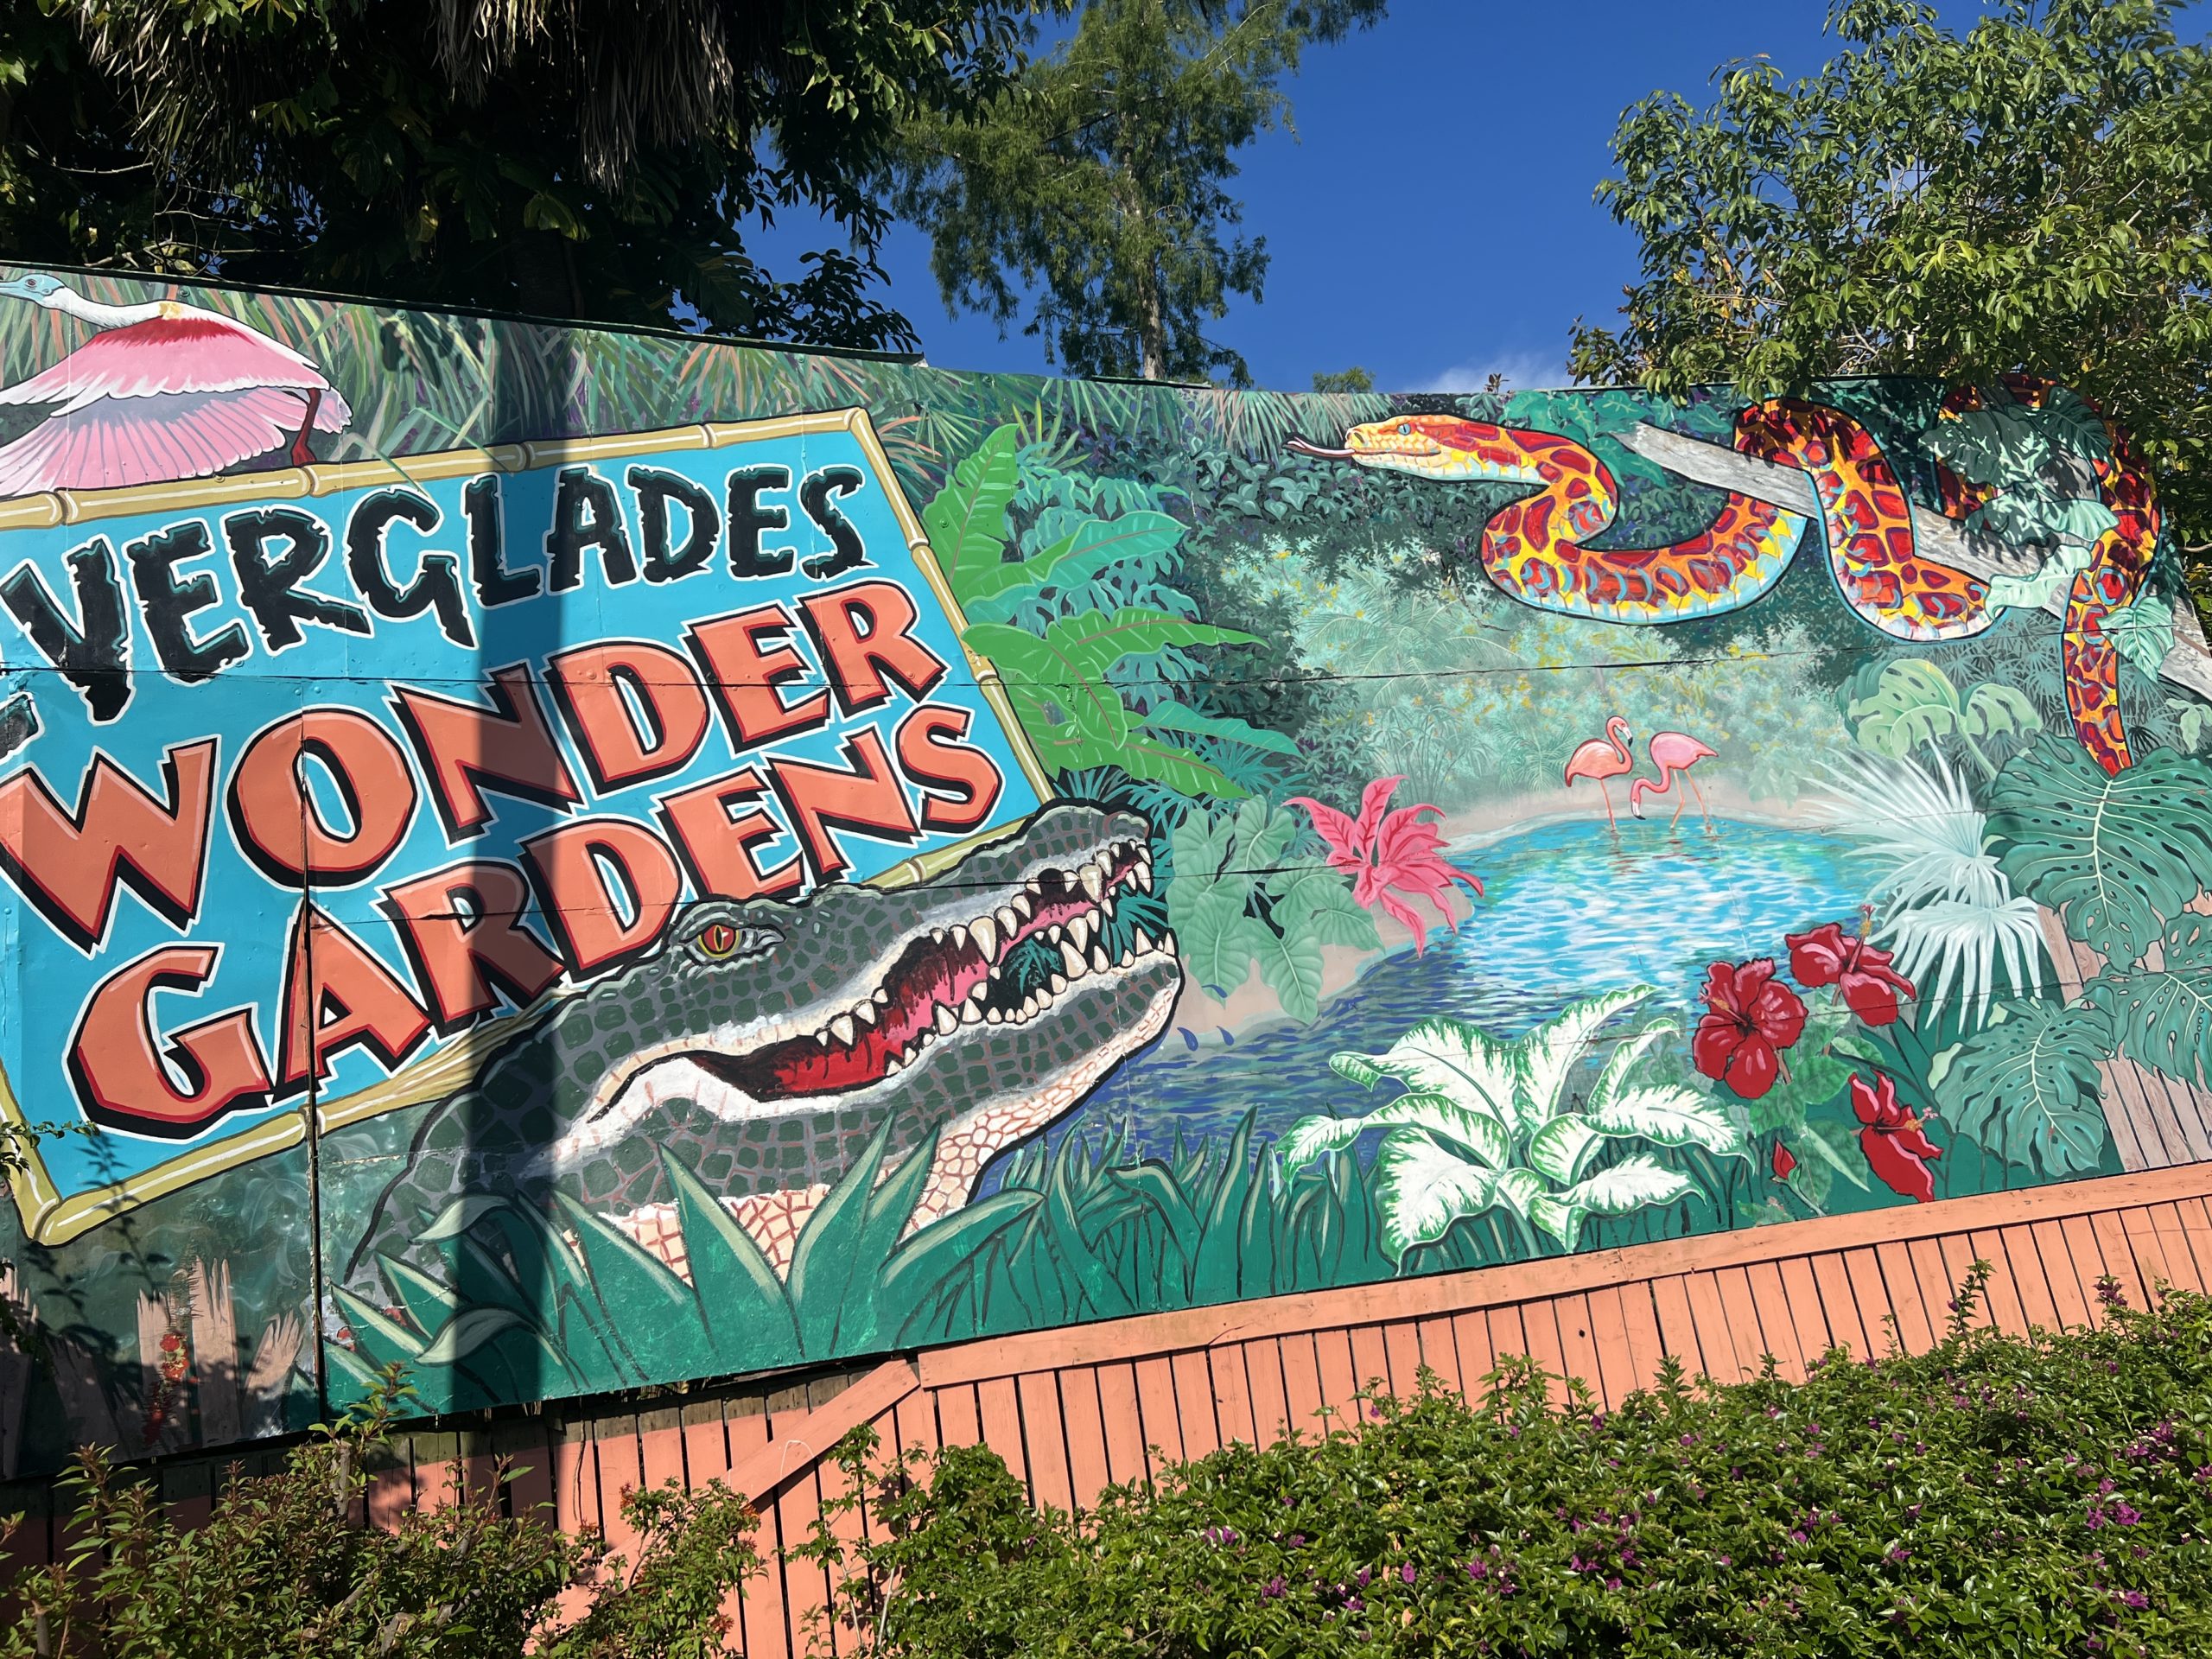 Everglades Wonder Gardens mural in Bonita Springs